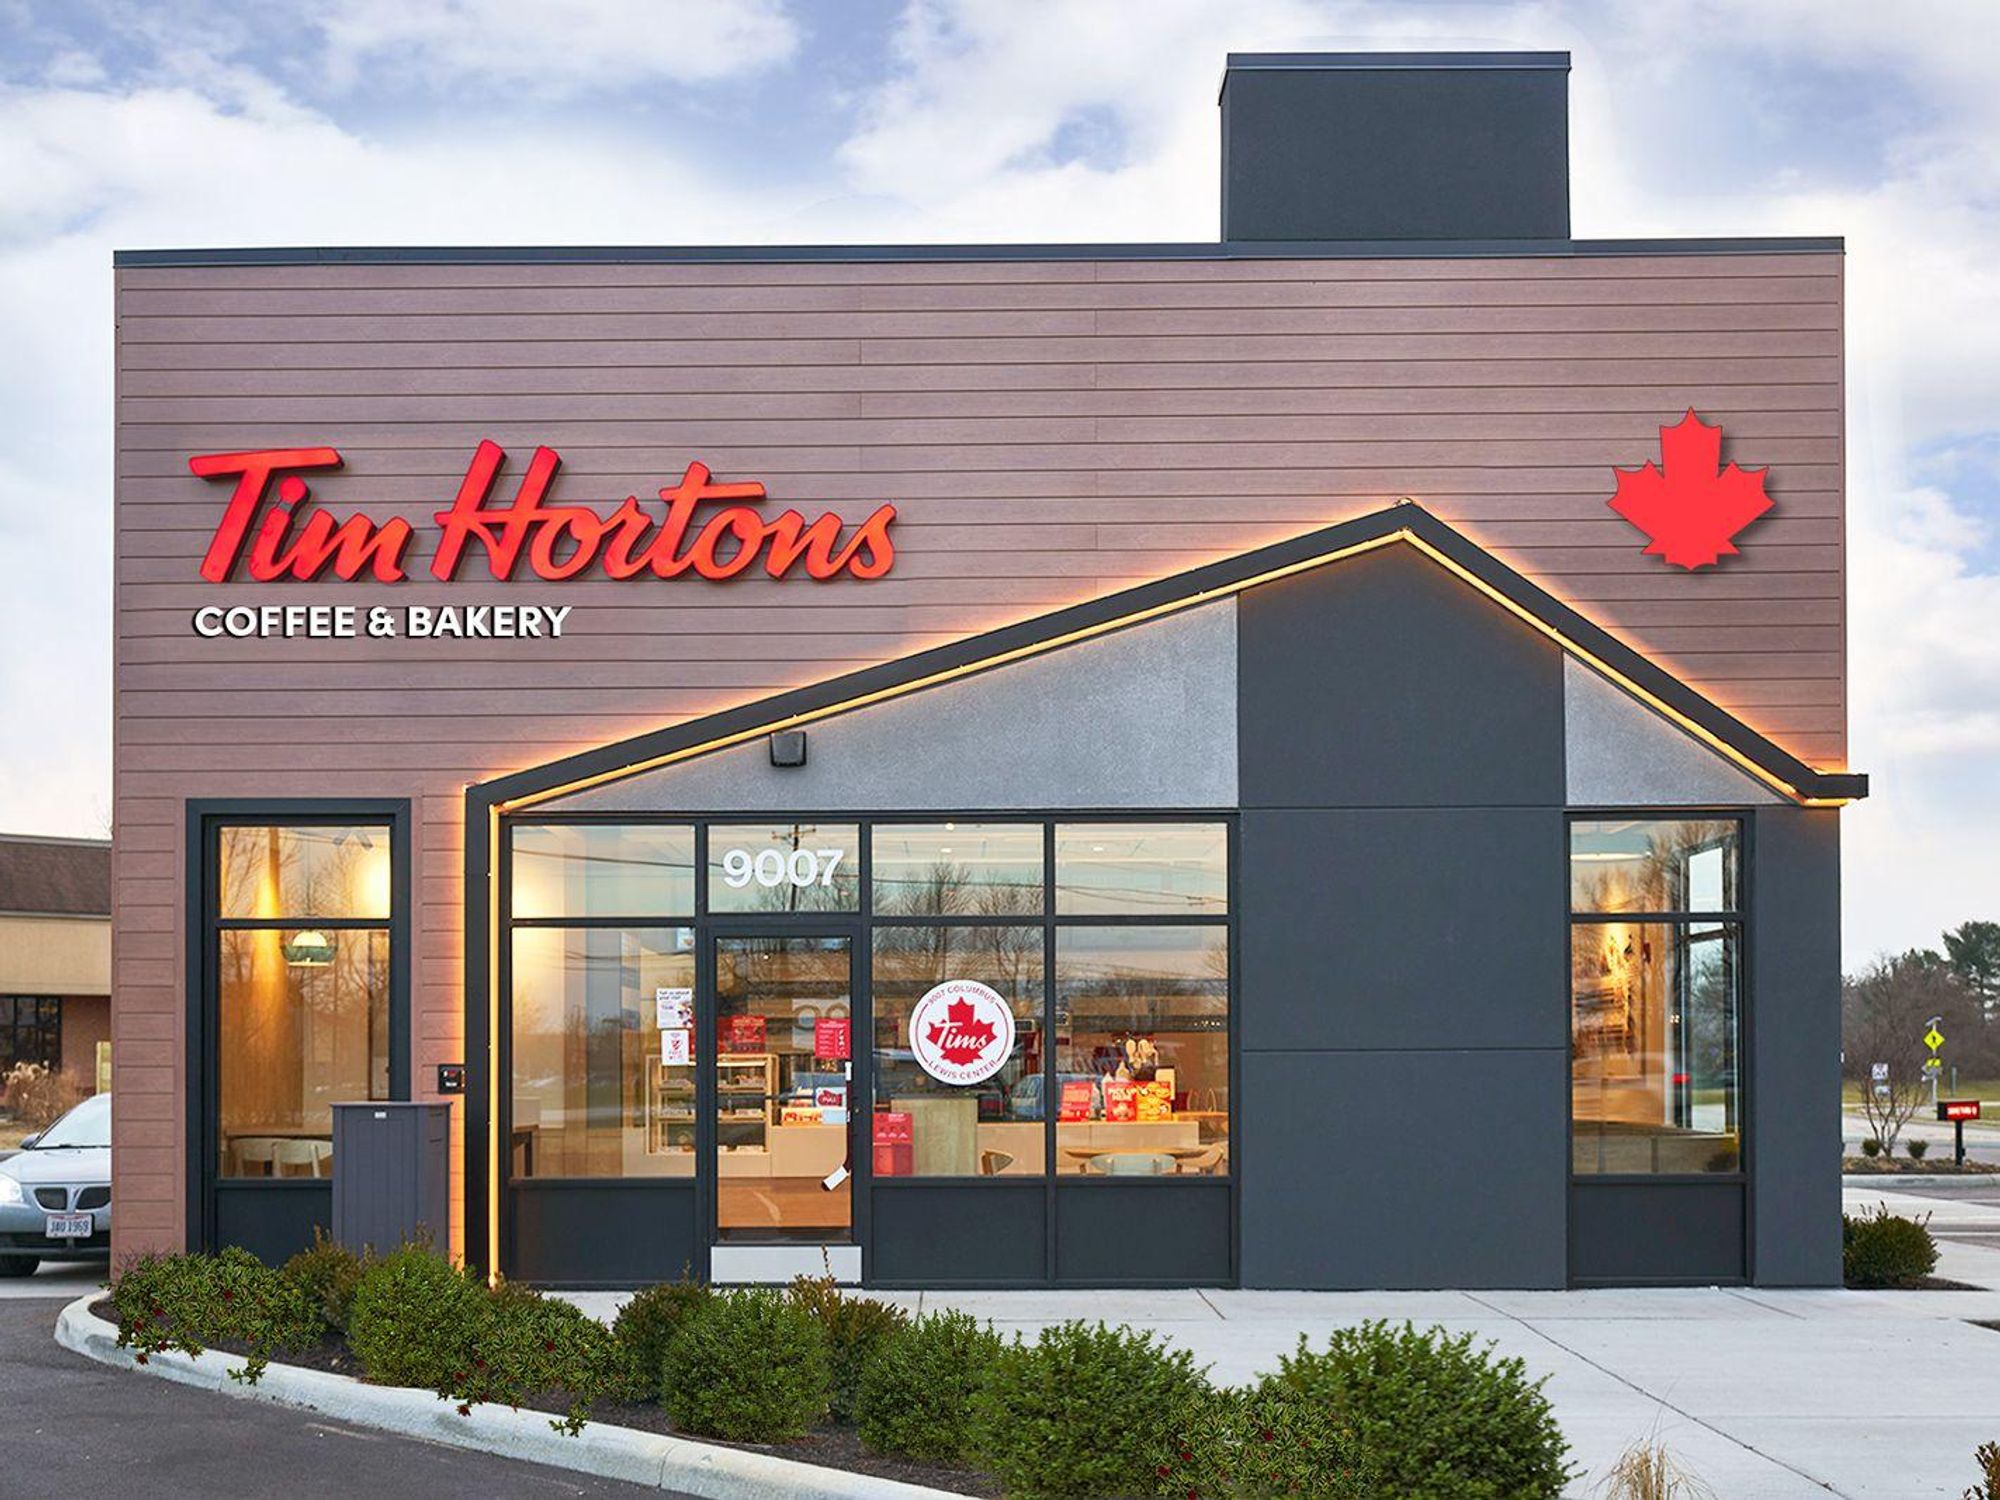 Tim Hortons Retail Design Case Study by Beyond London